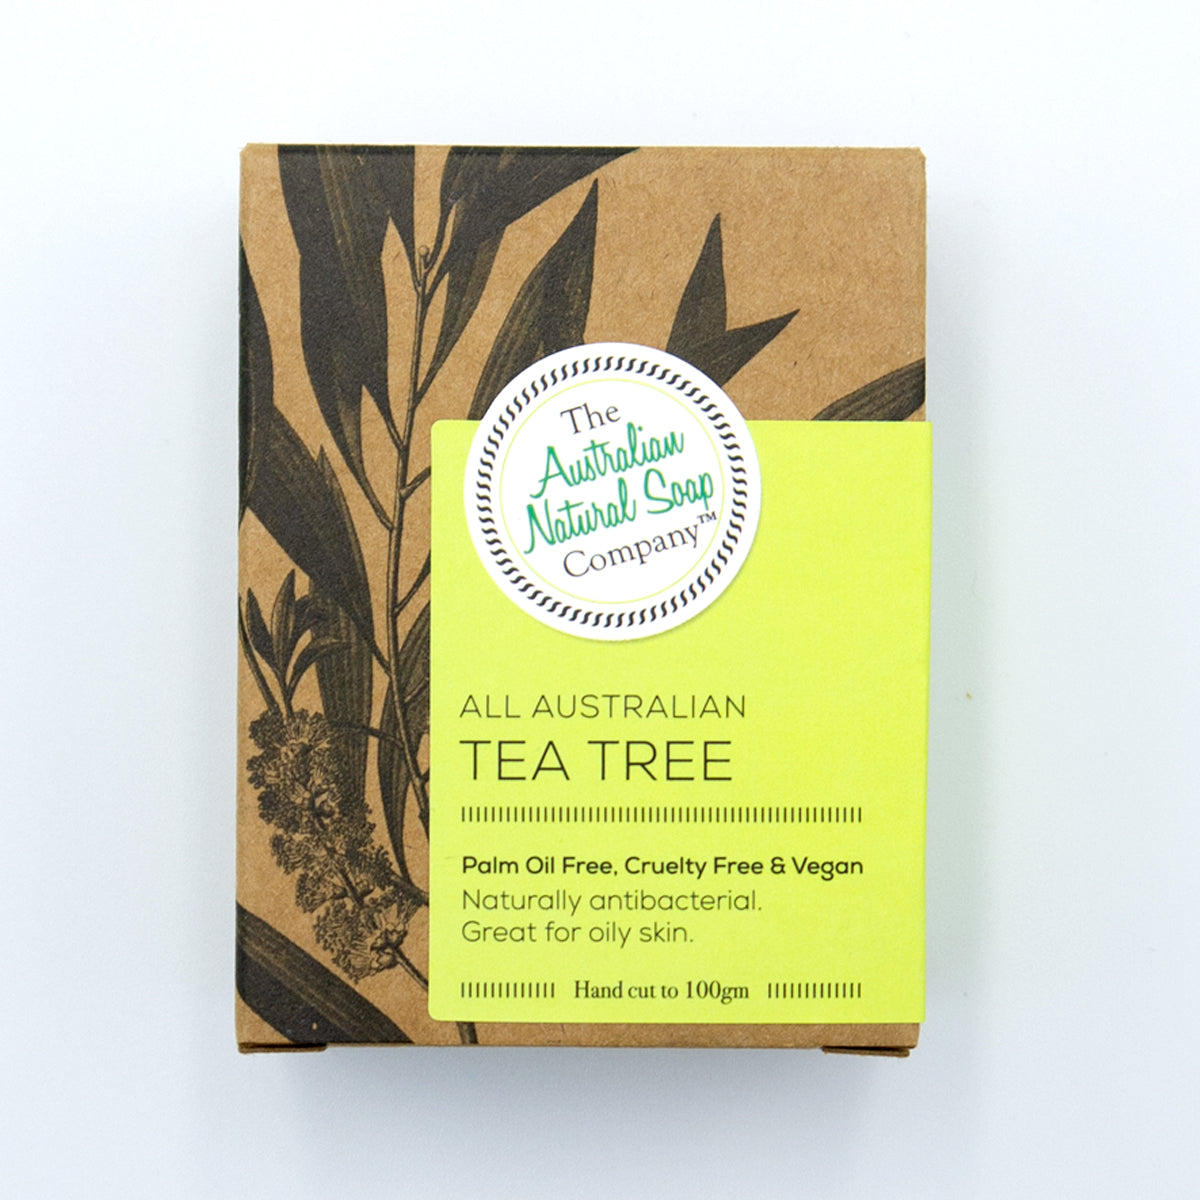 All Australian Tea Tree Face Soap